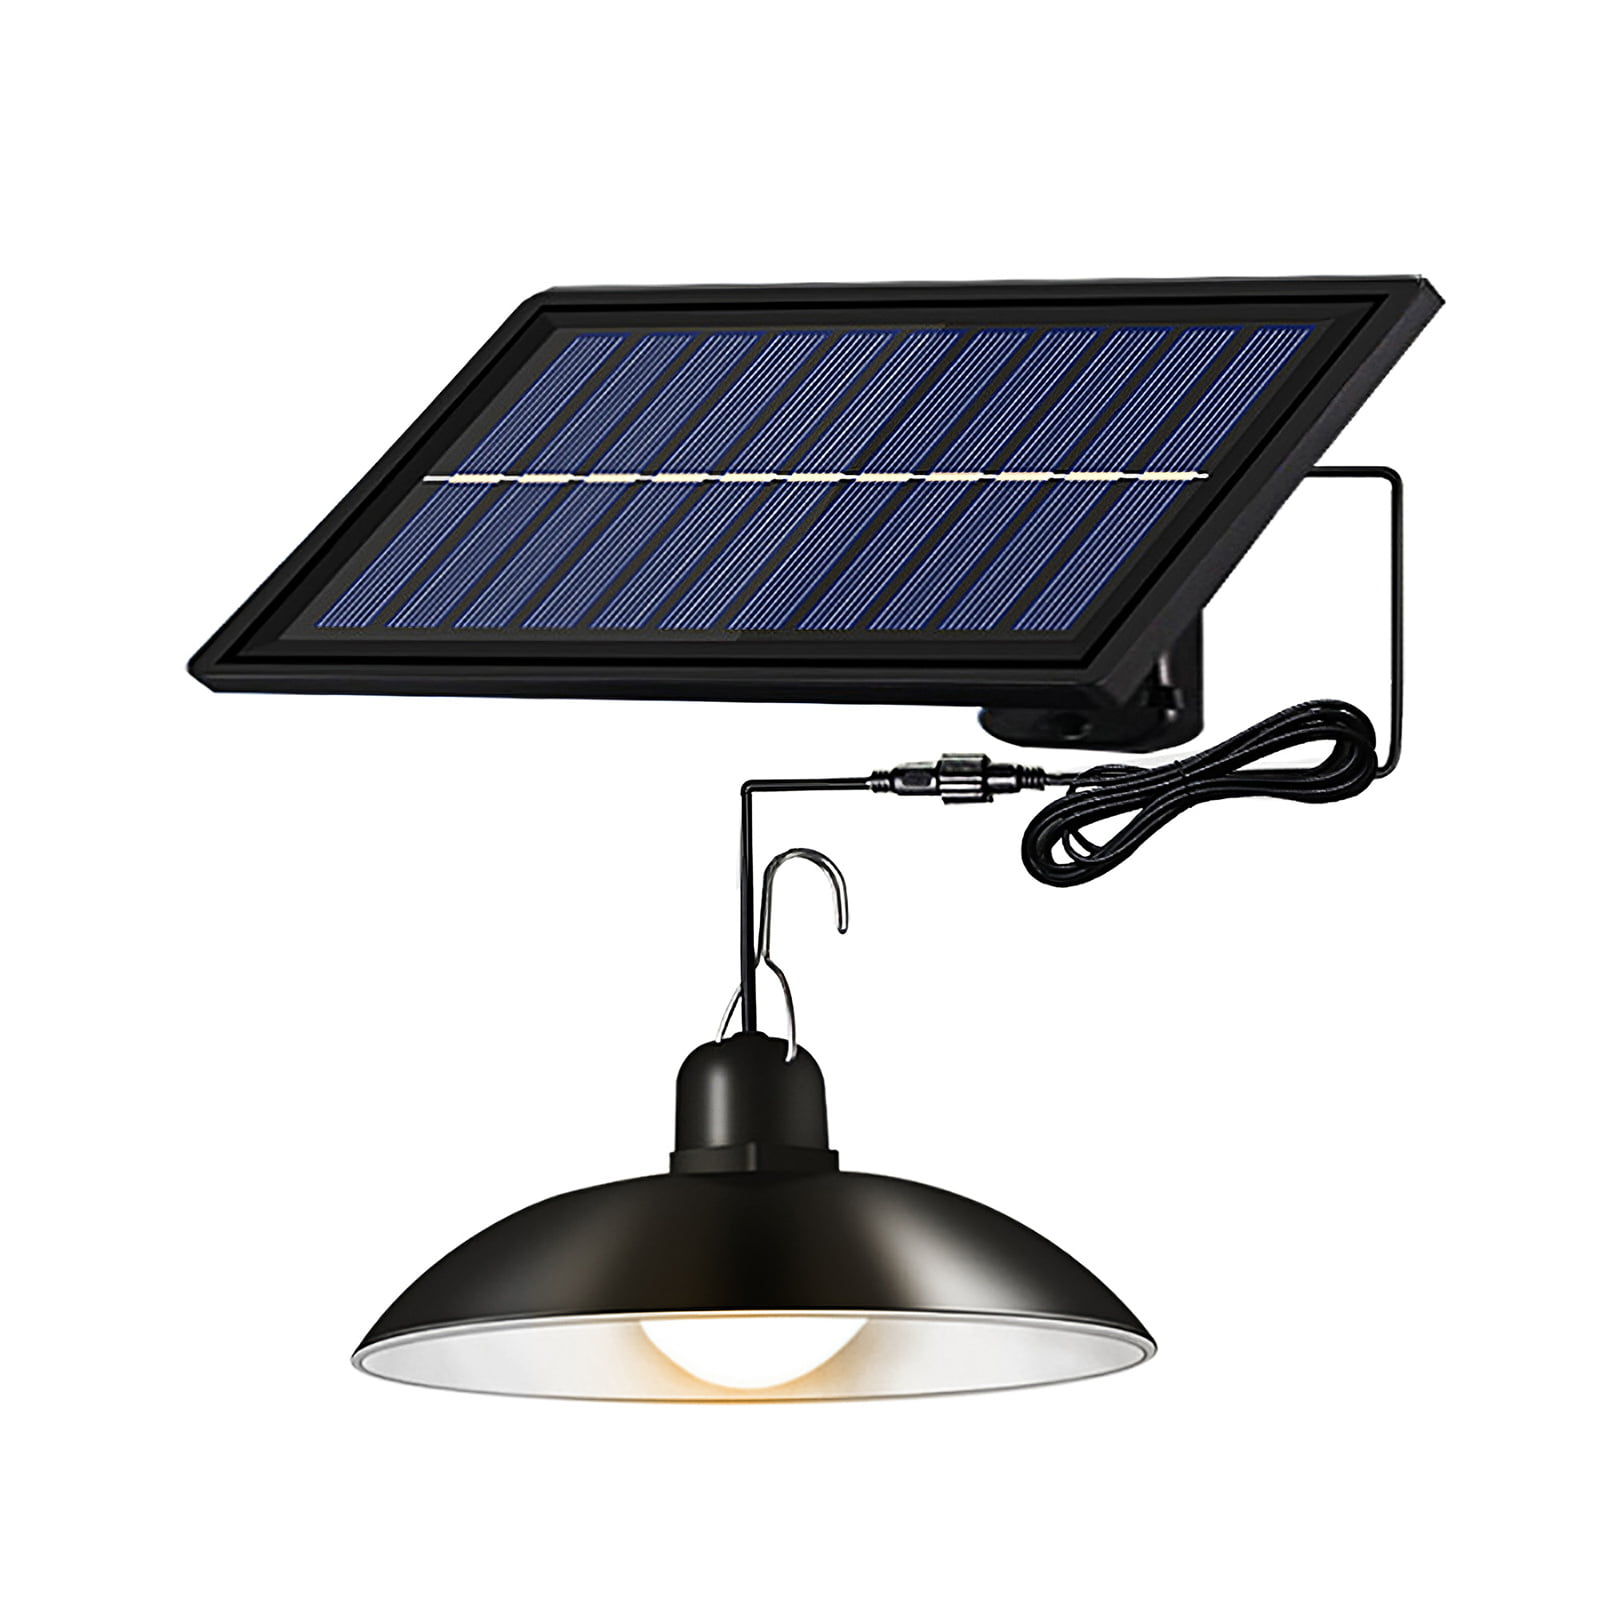 Solar Powered 9 LED PIR Motion Sensor Security Outdoor Solar Light Shed 